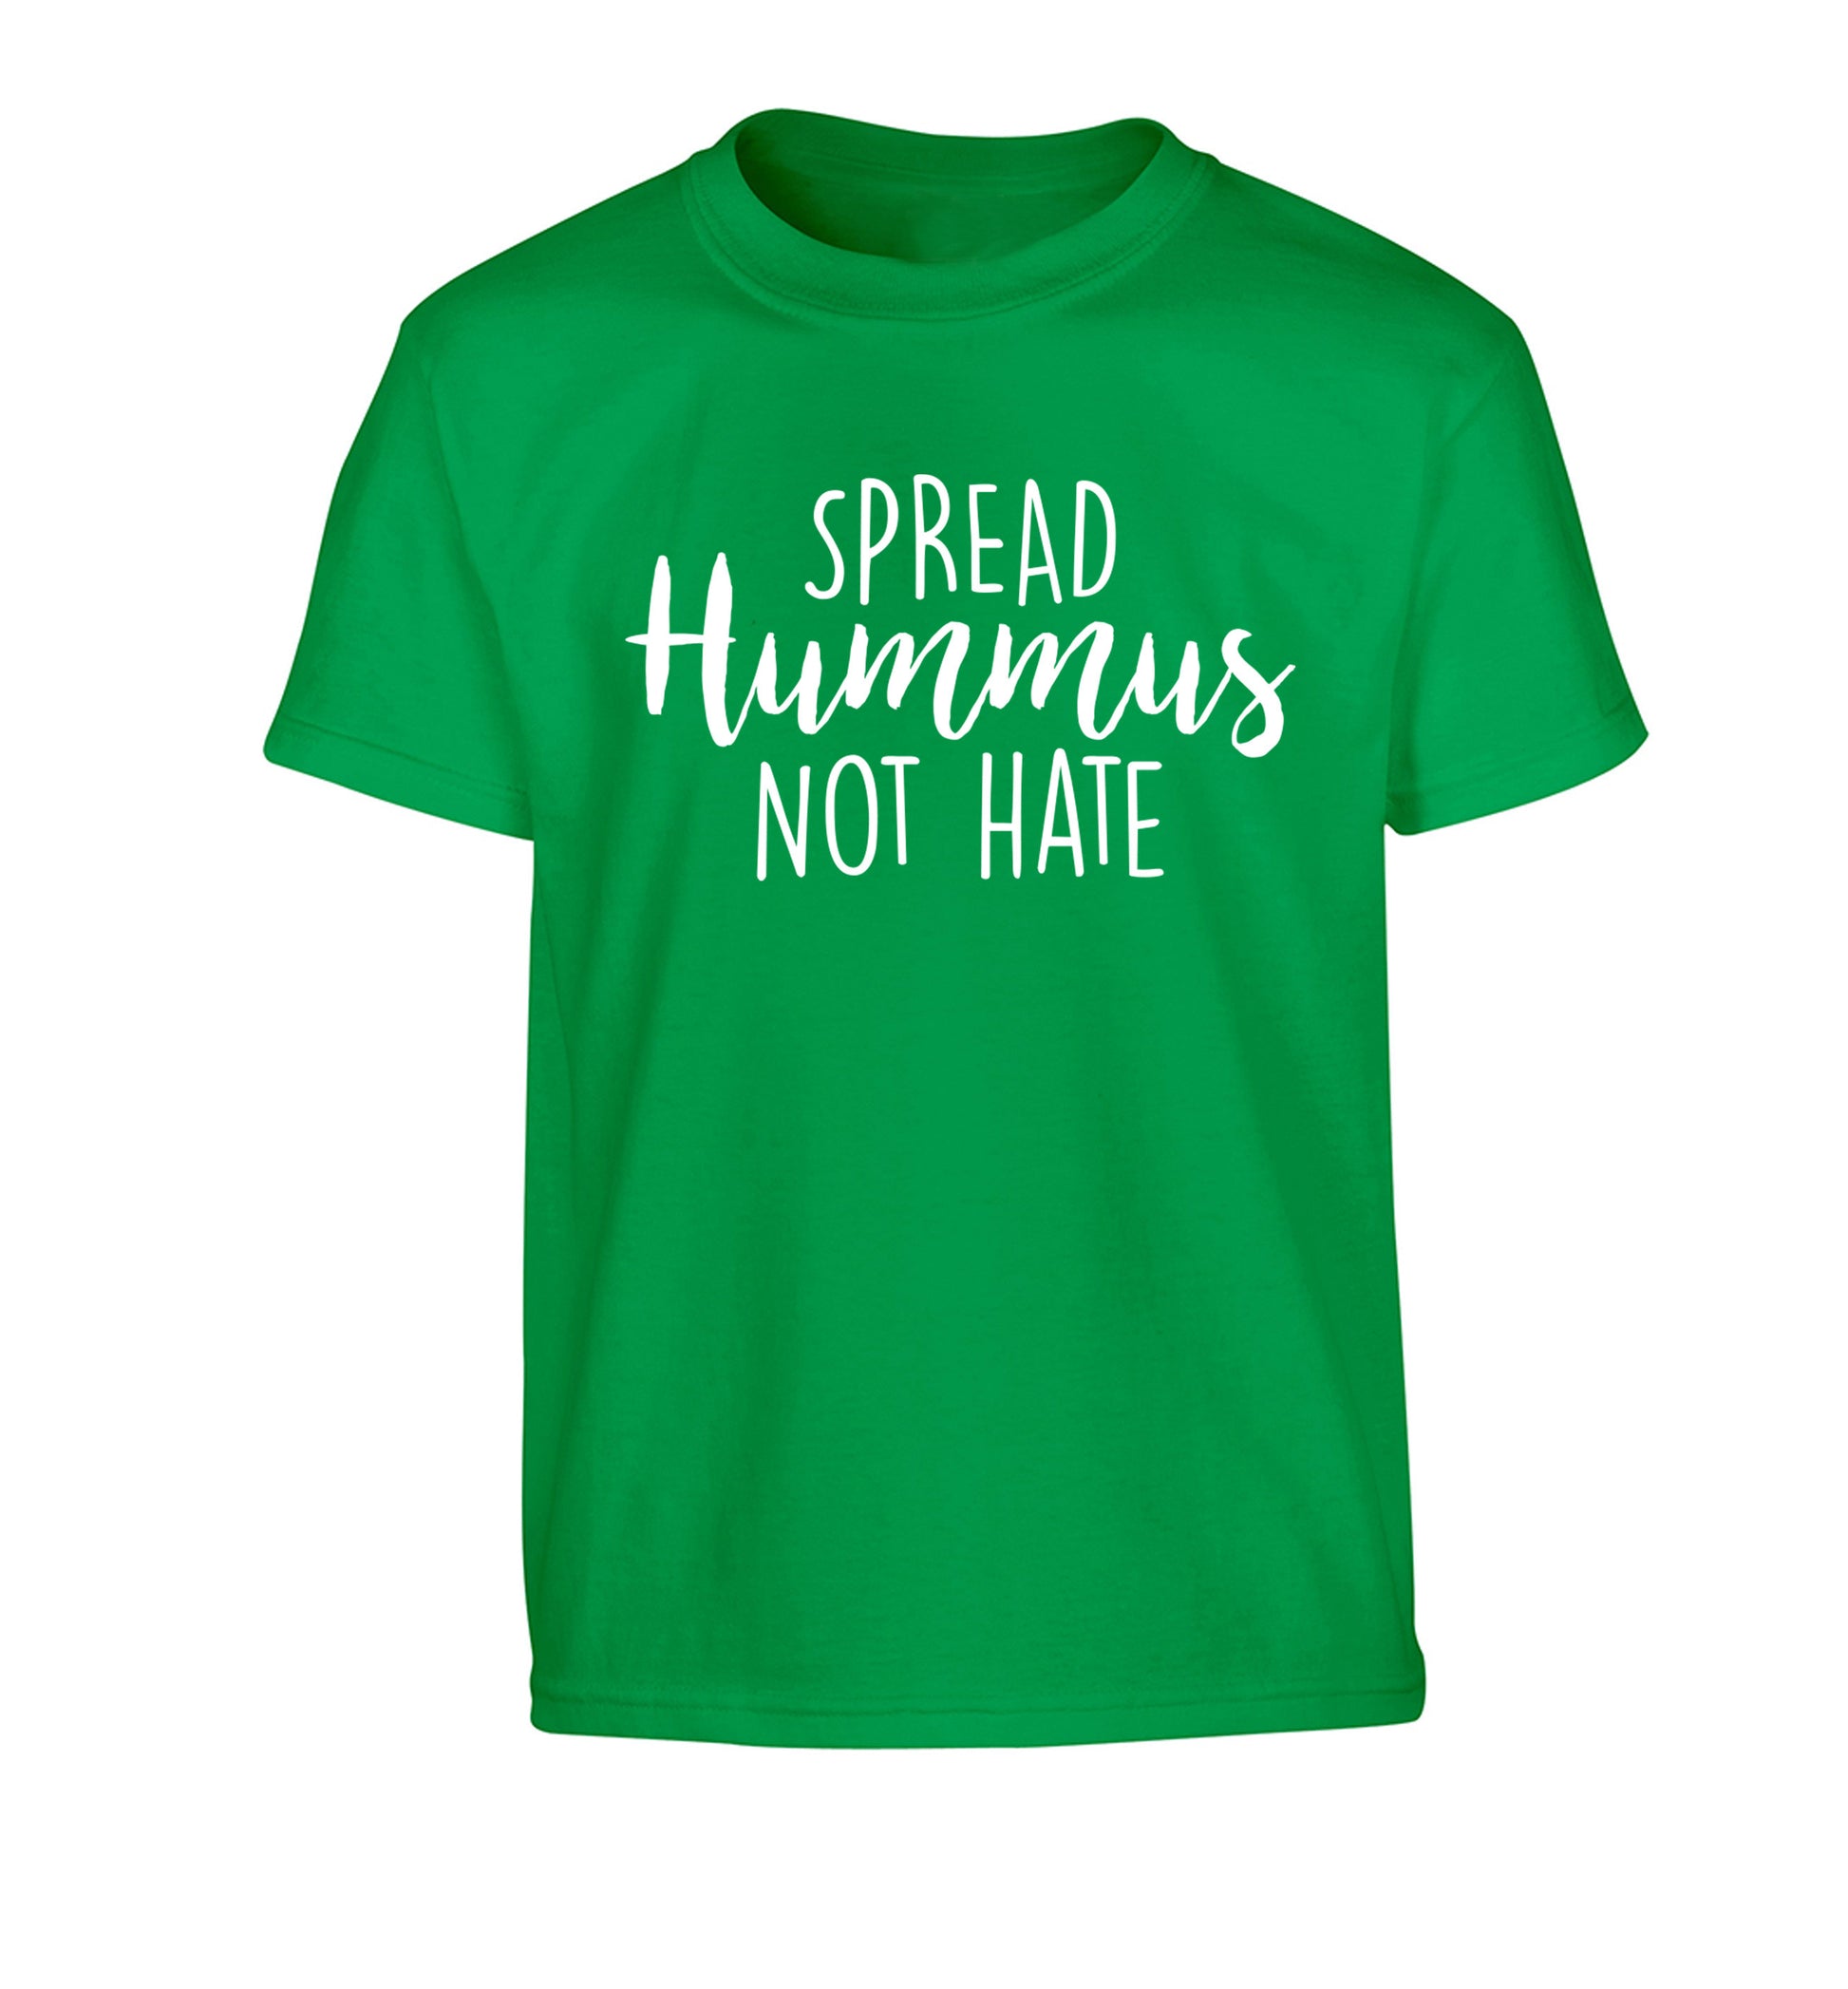 Spread hummus not hate script text Children's green Tshirt 12-14 Years